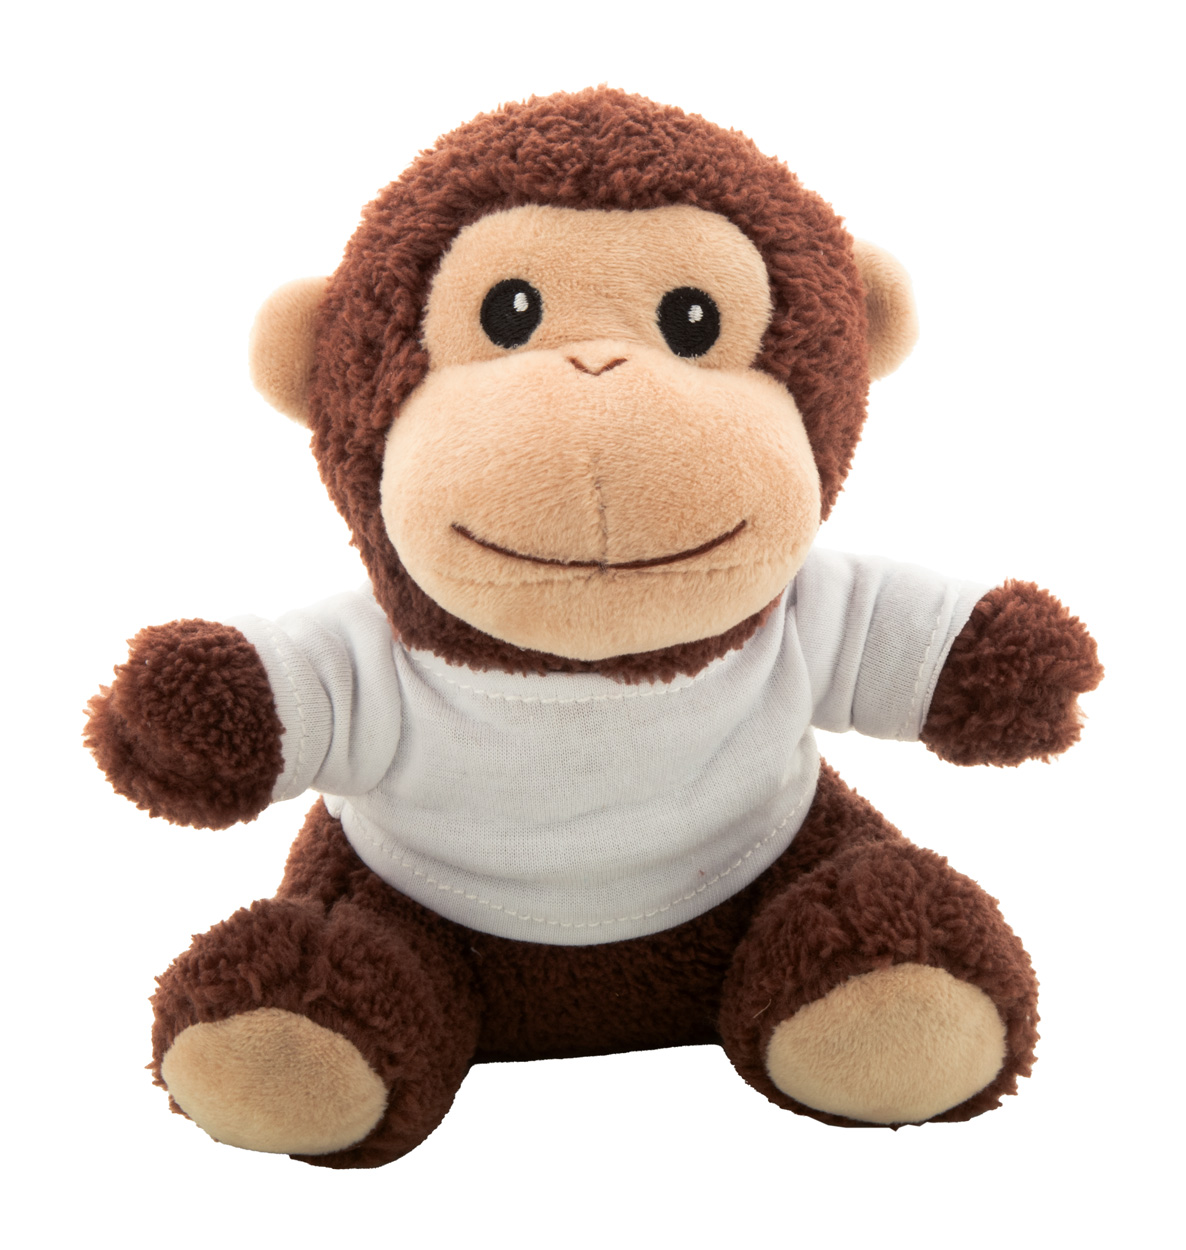 Rehowl RPET plush monkey - brown